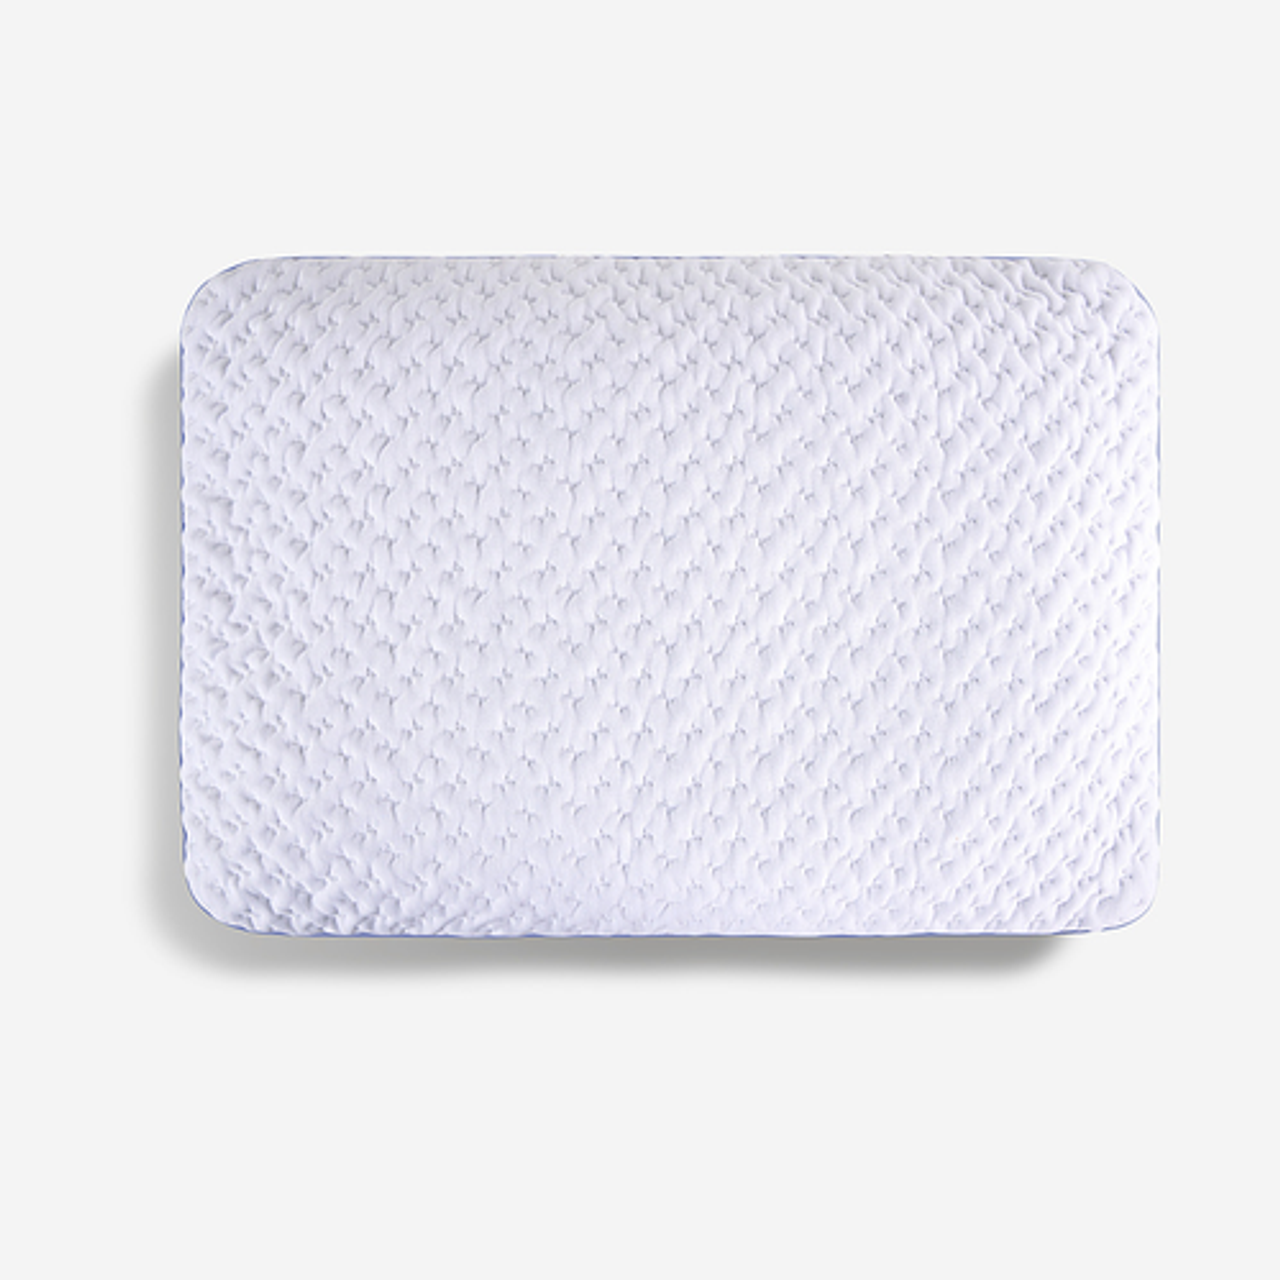 Bedgear - Balance Performance Pillow 1.0 - White